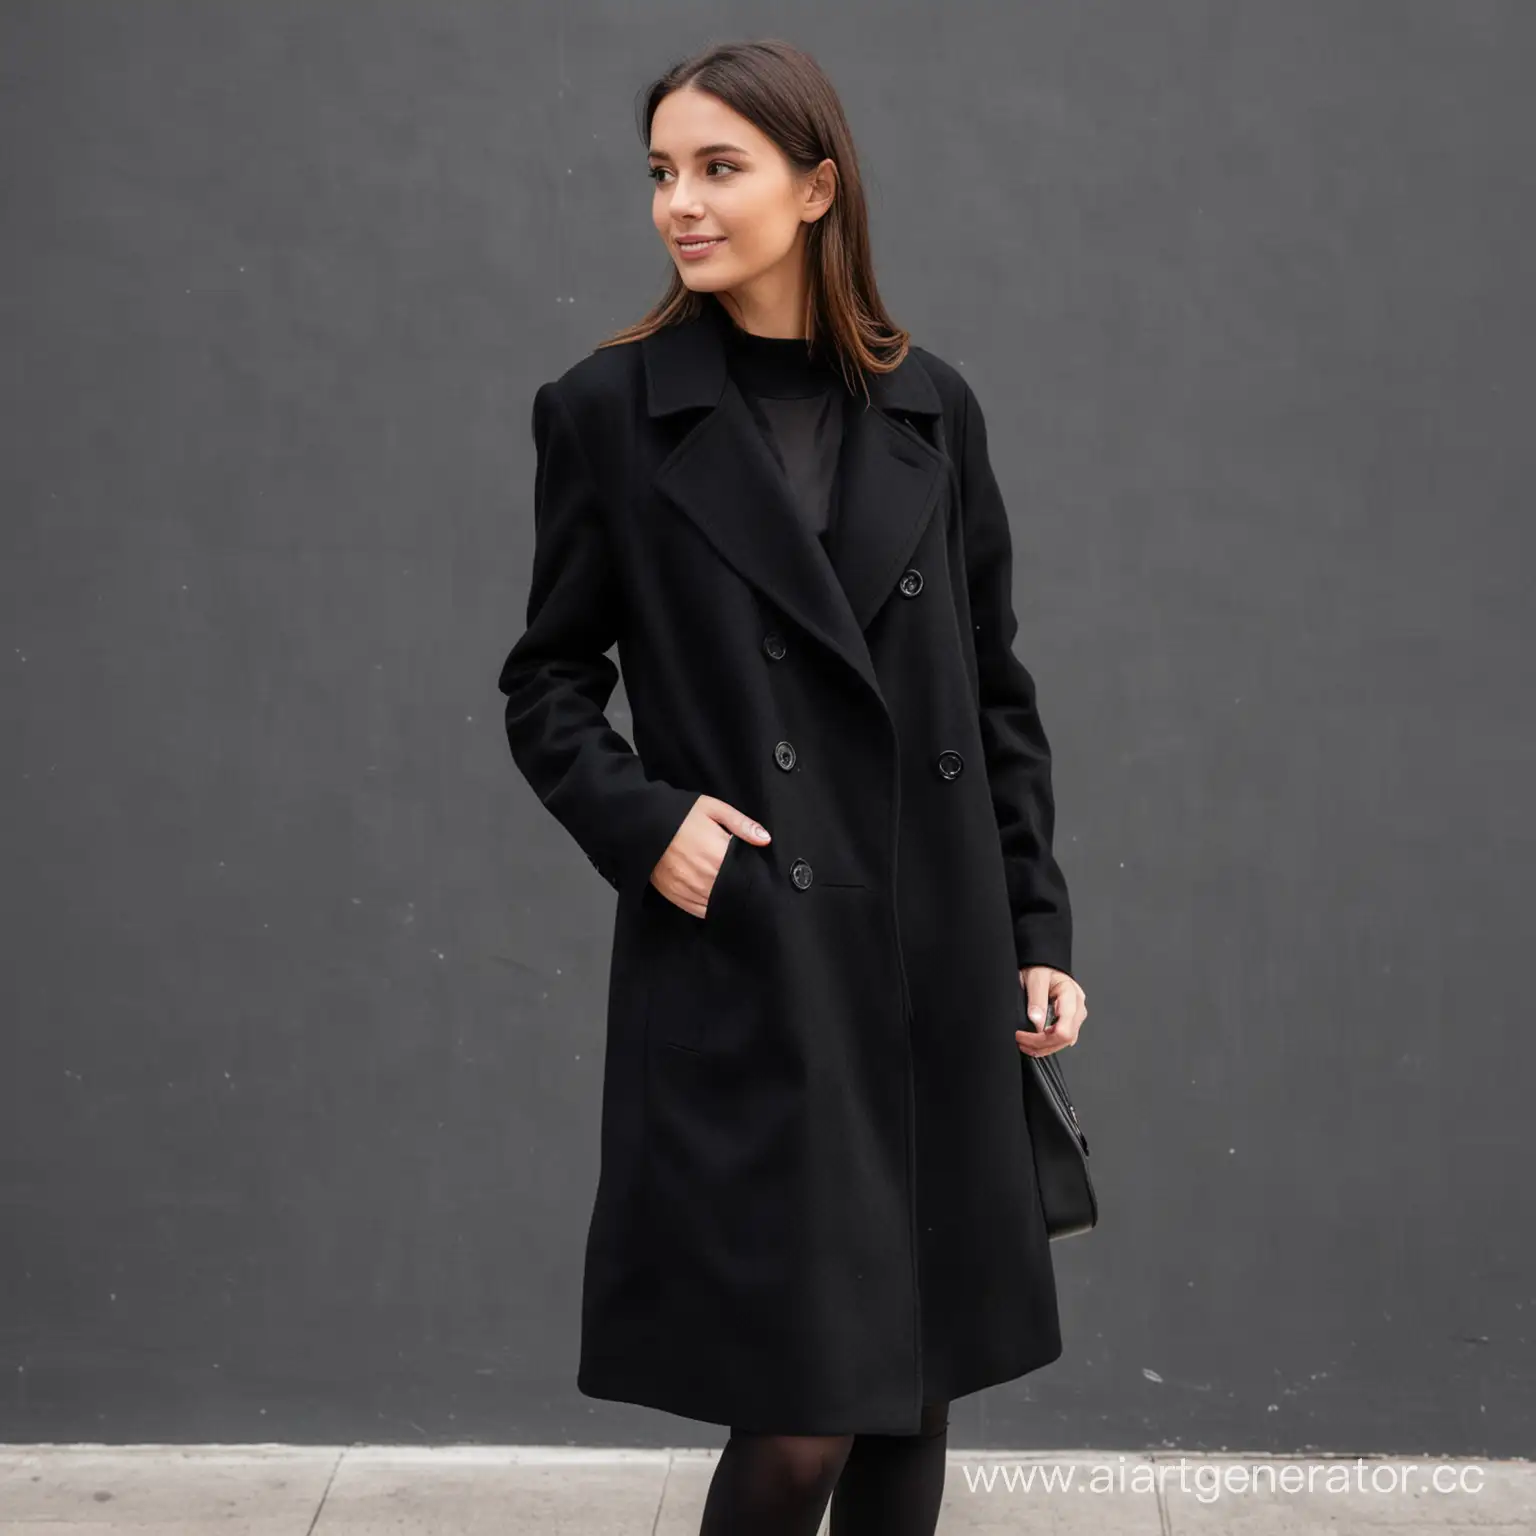 Elegant-Woman-in-a-Stylish-Black-Coat